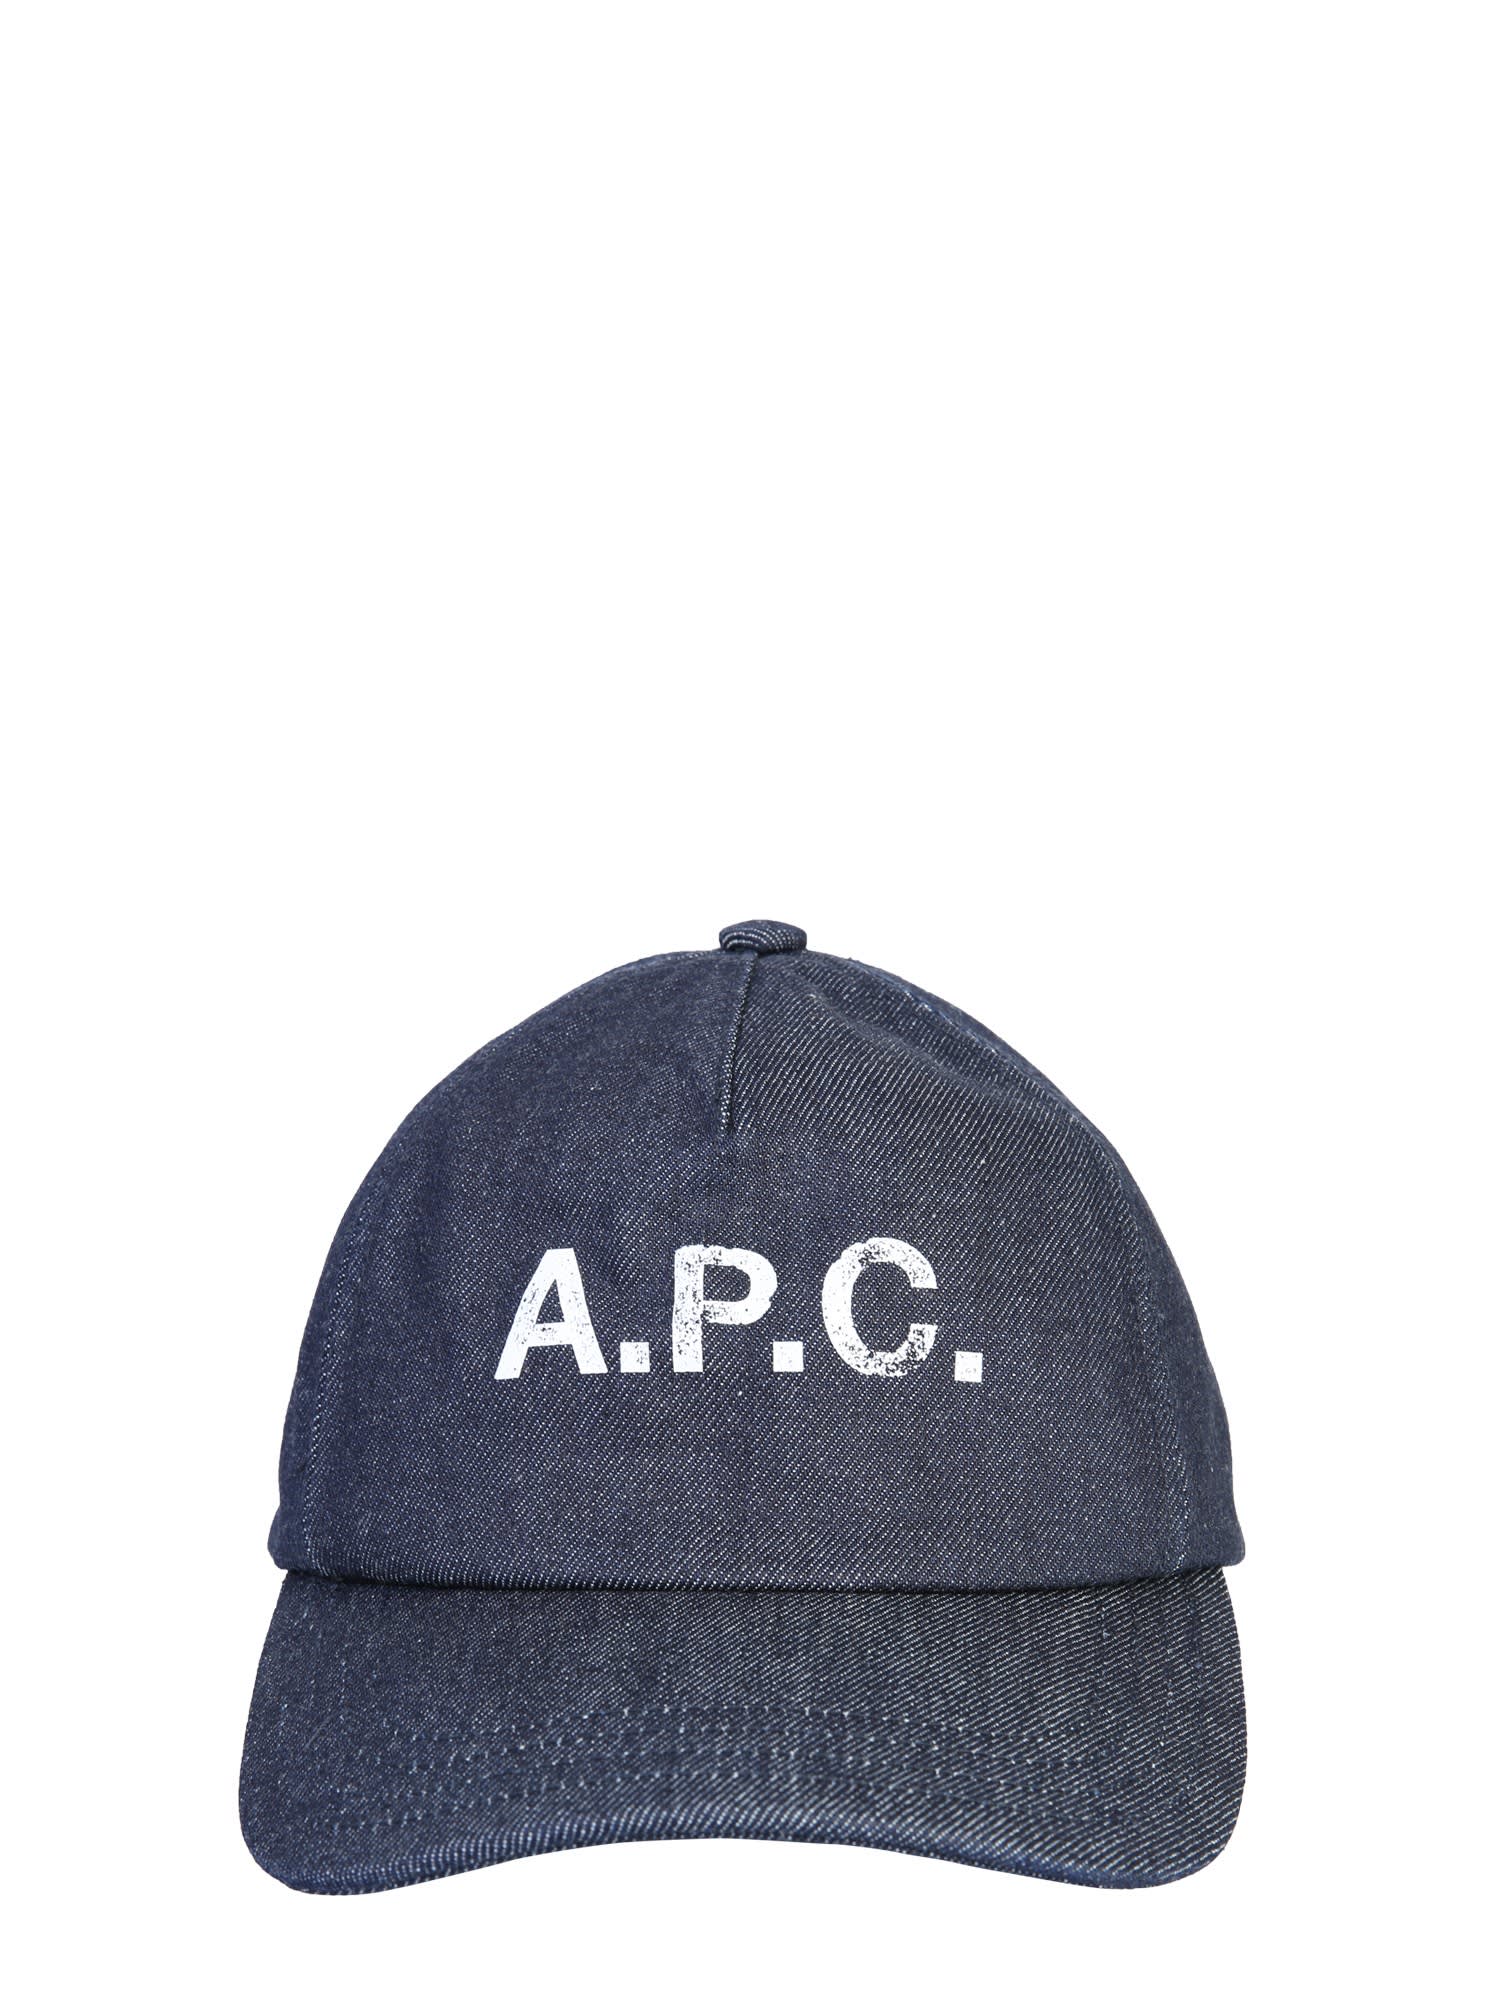 APC LOGO BASEBALL HAT,11211977